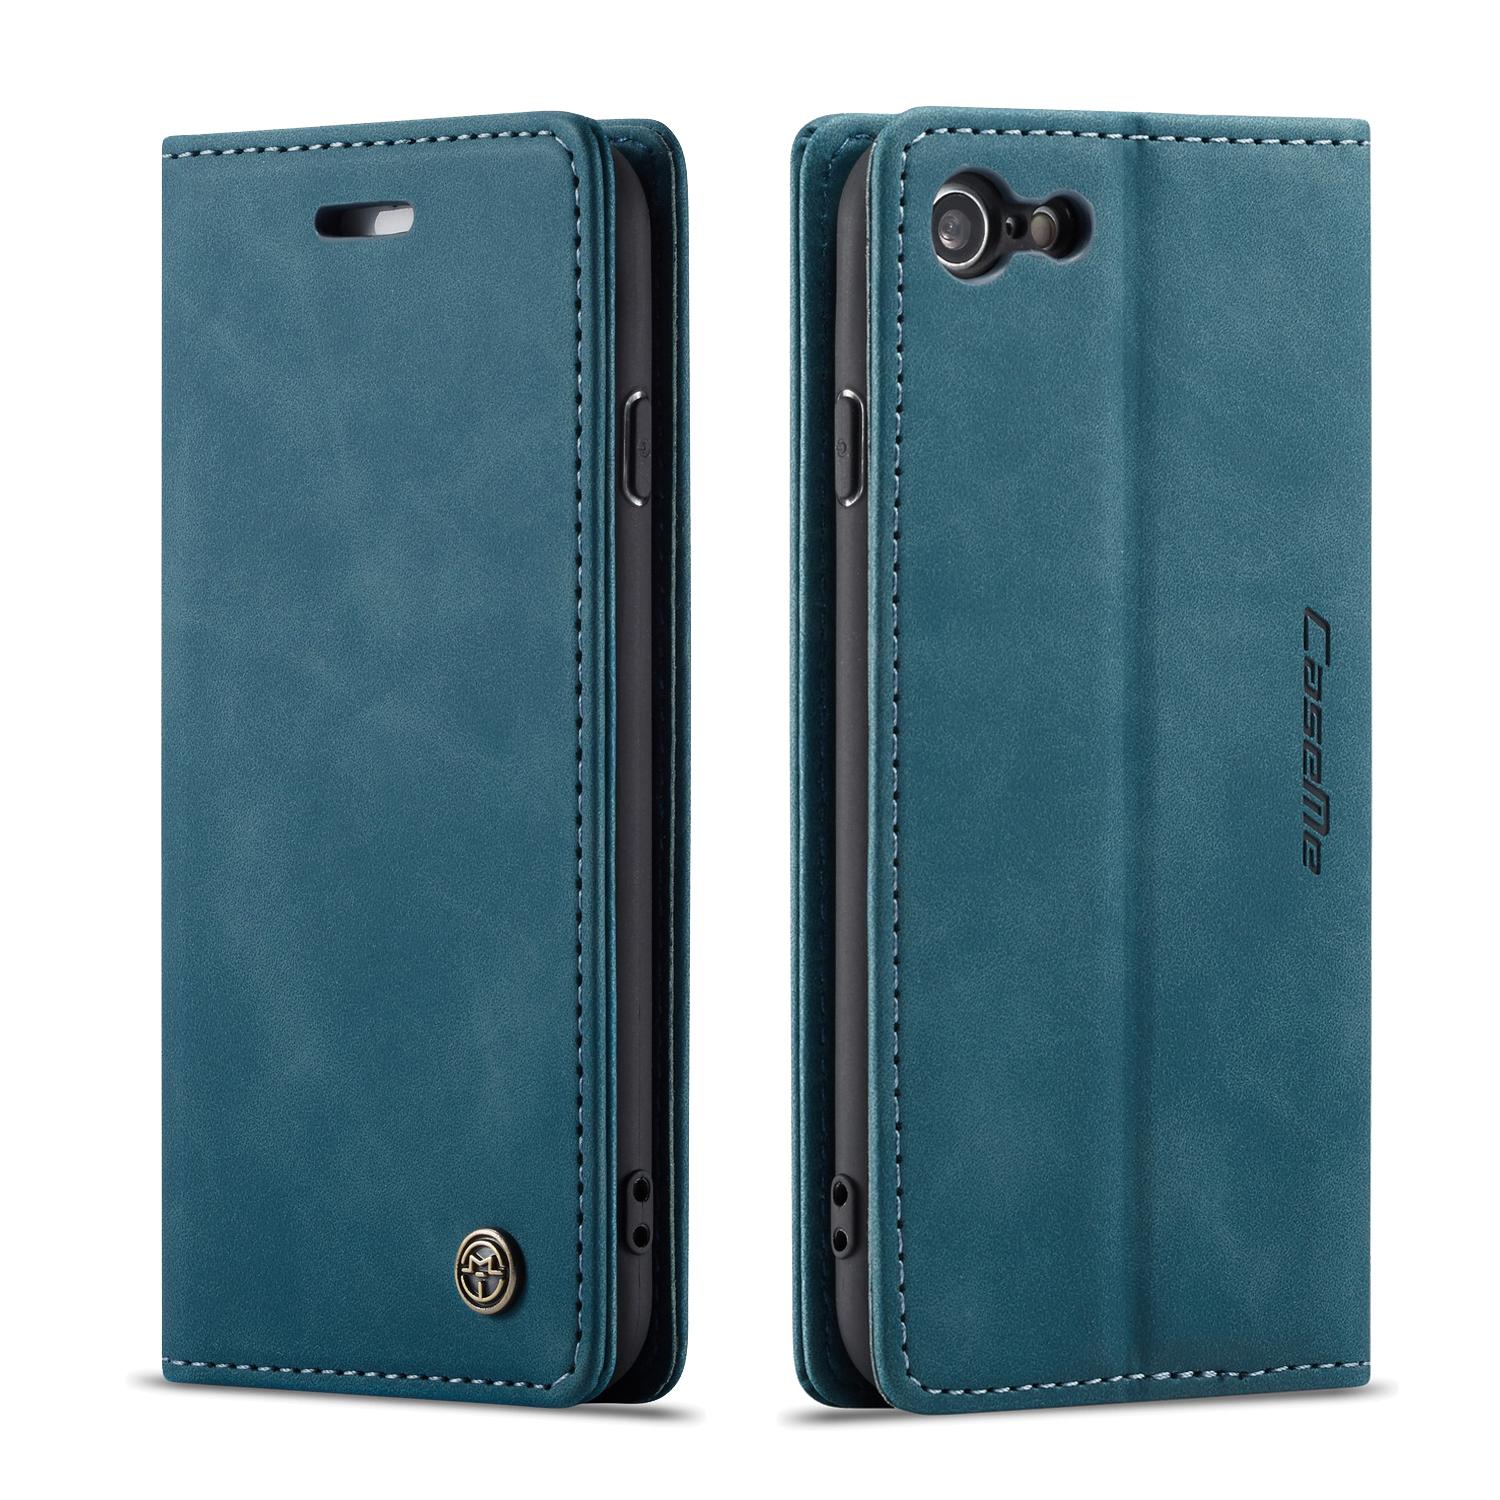 iPhone 7 Slim Wallet Case Blue